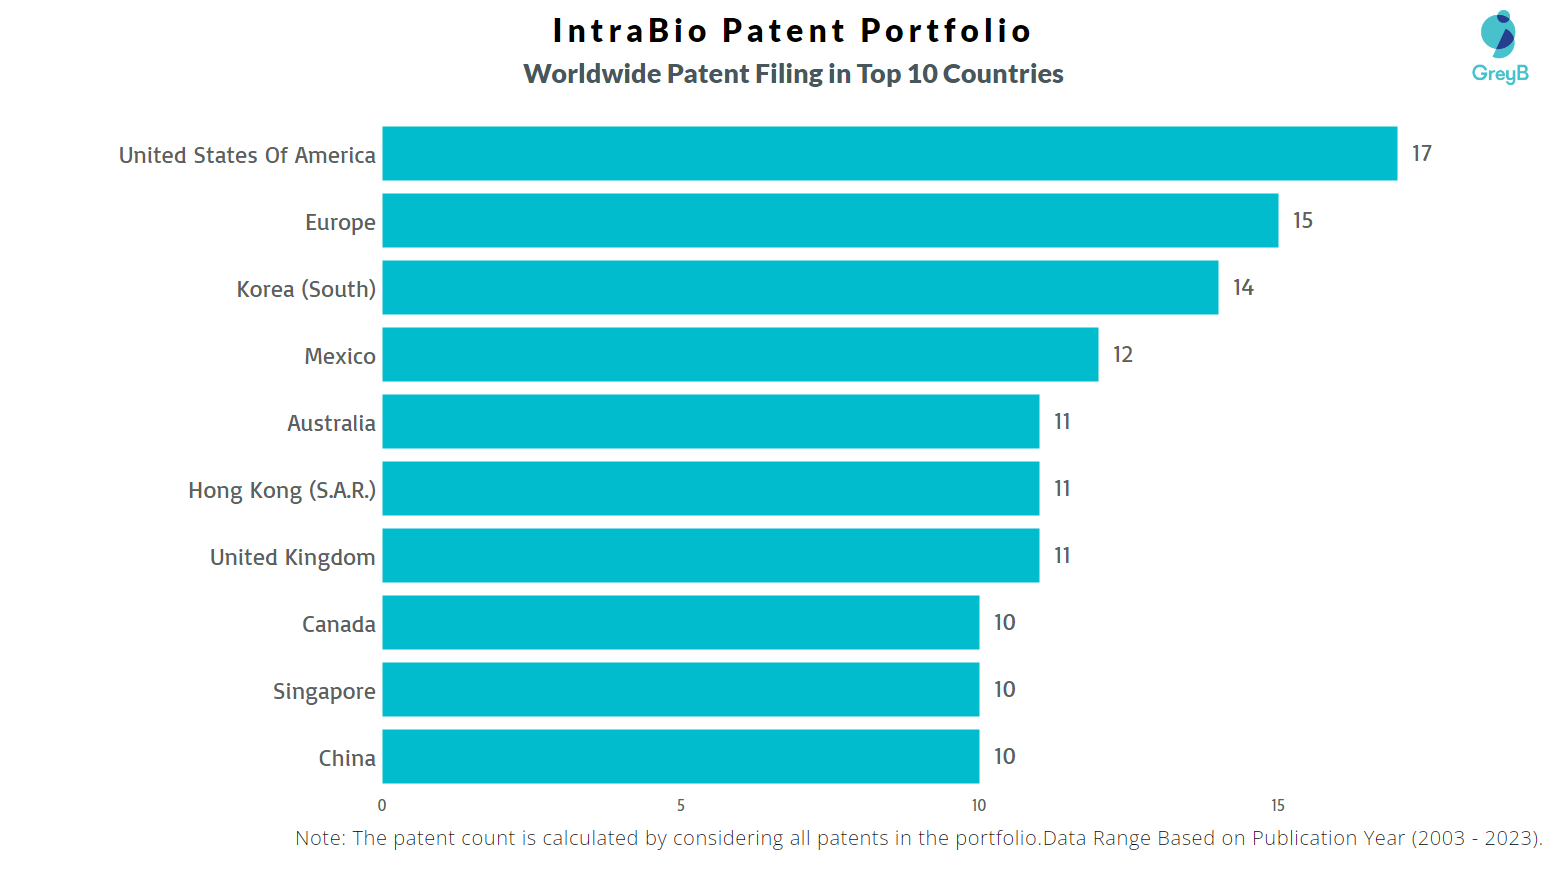 IntraBio Worldwide Patent Filing